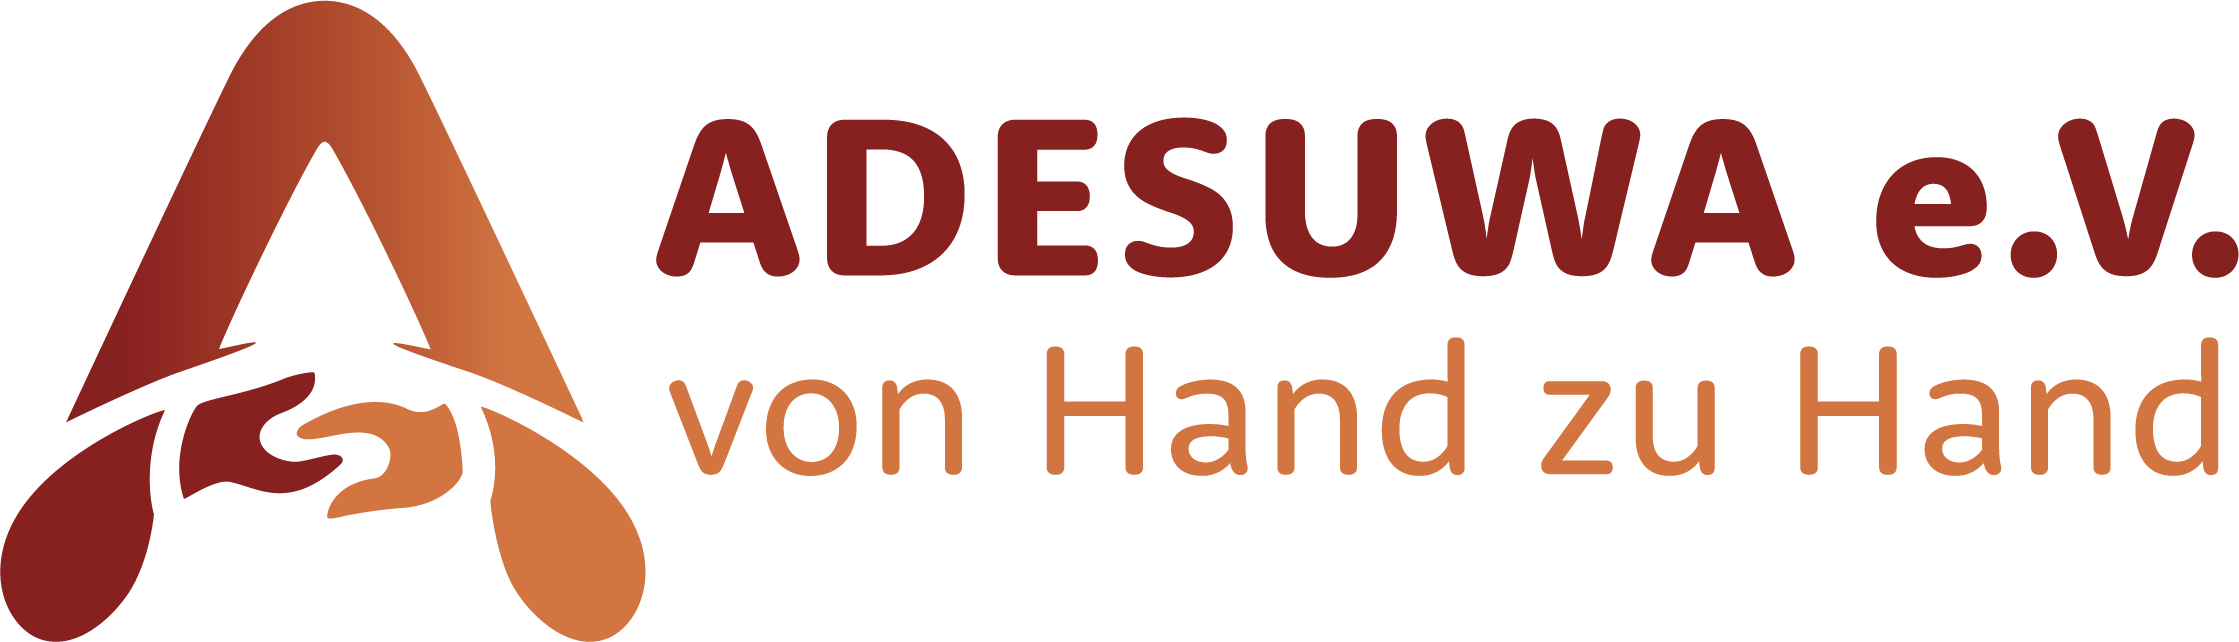 adesuwa-logo-bunt-zweizeilig